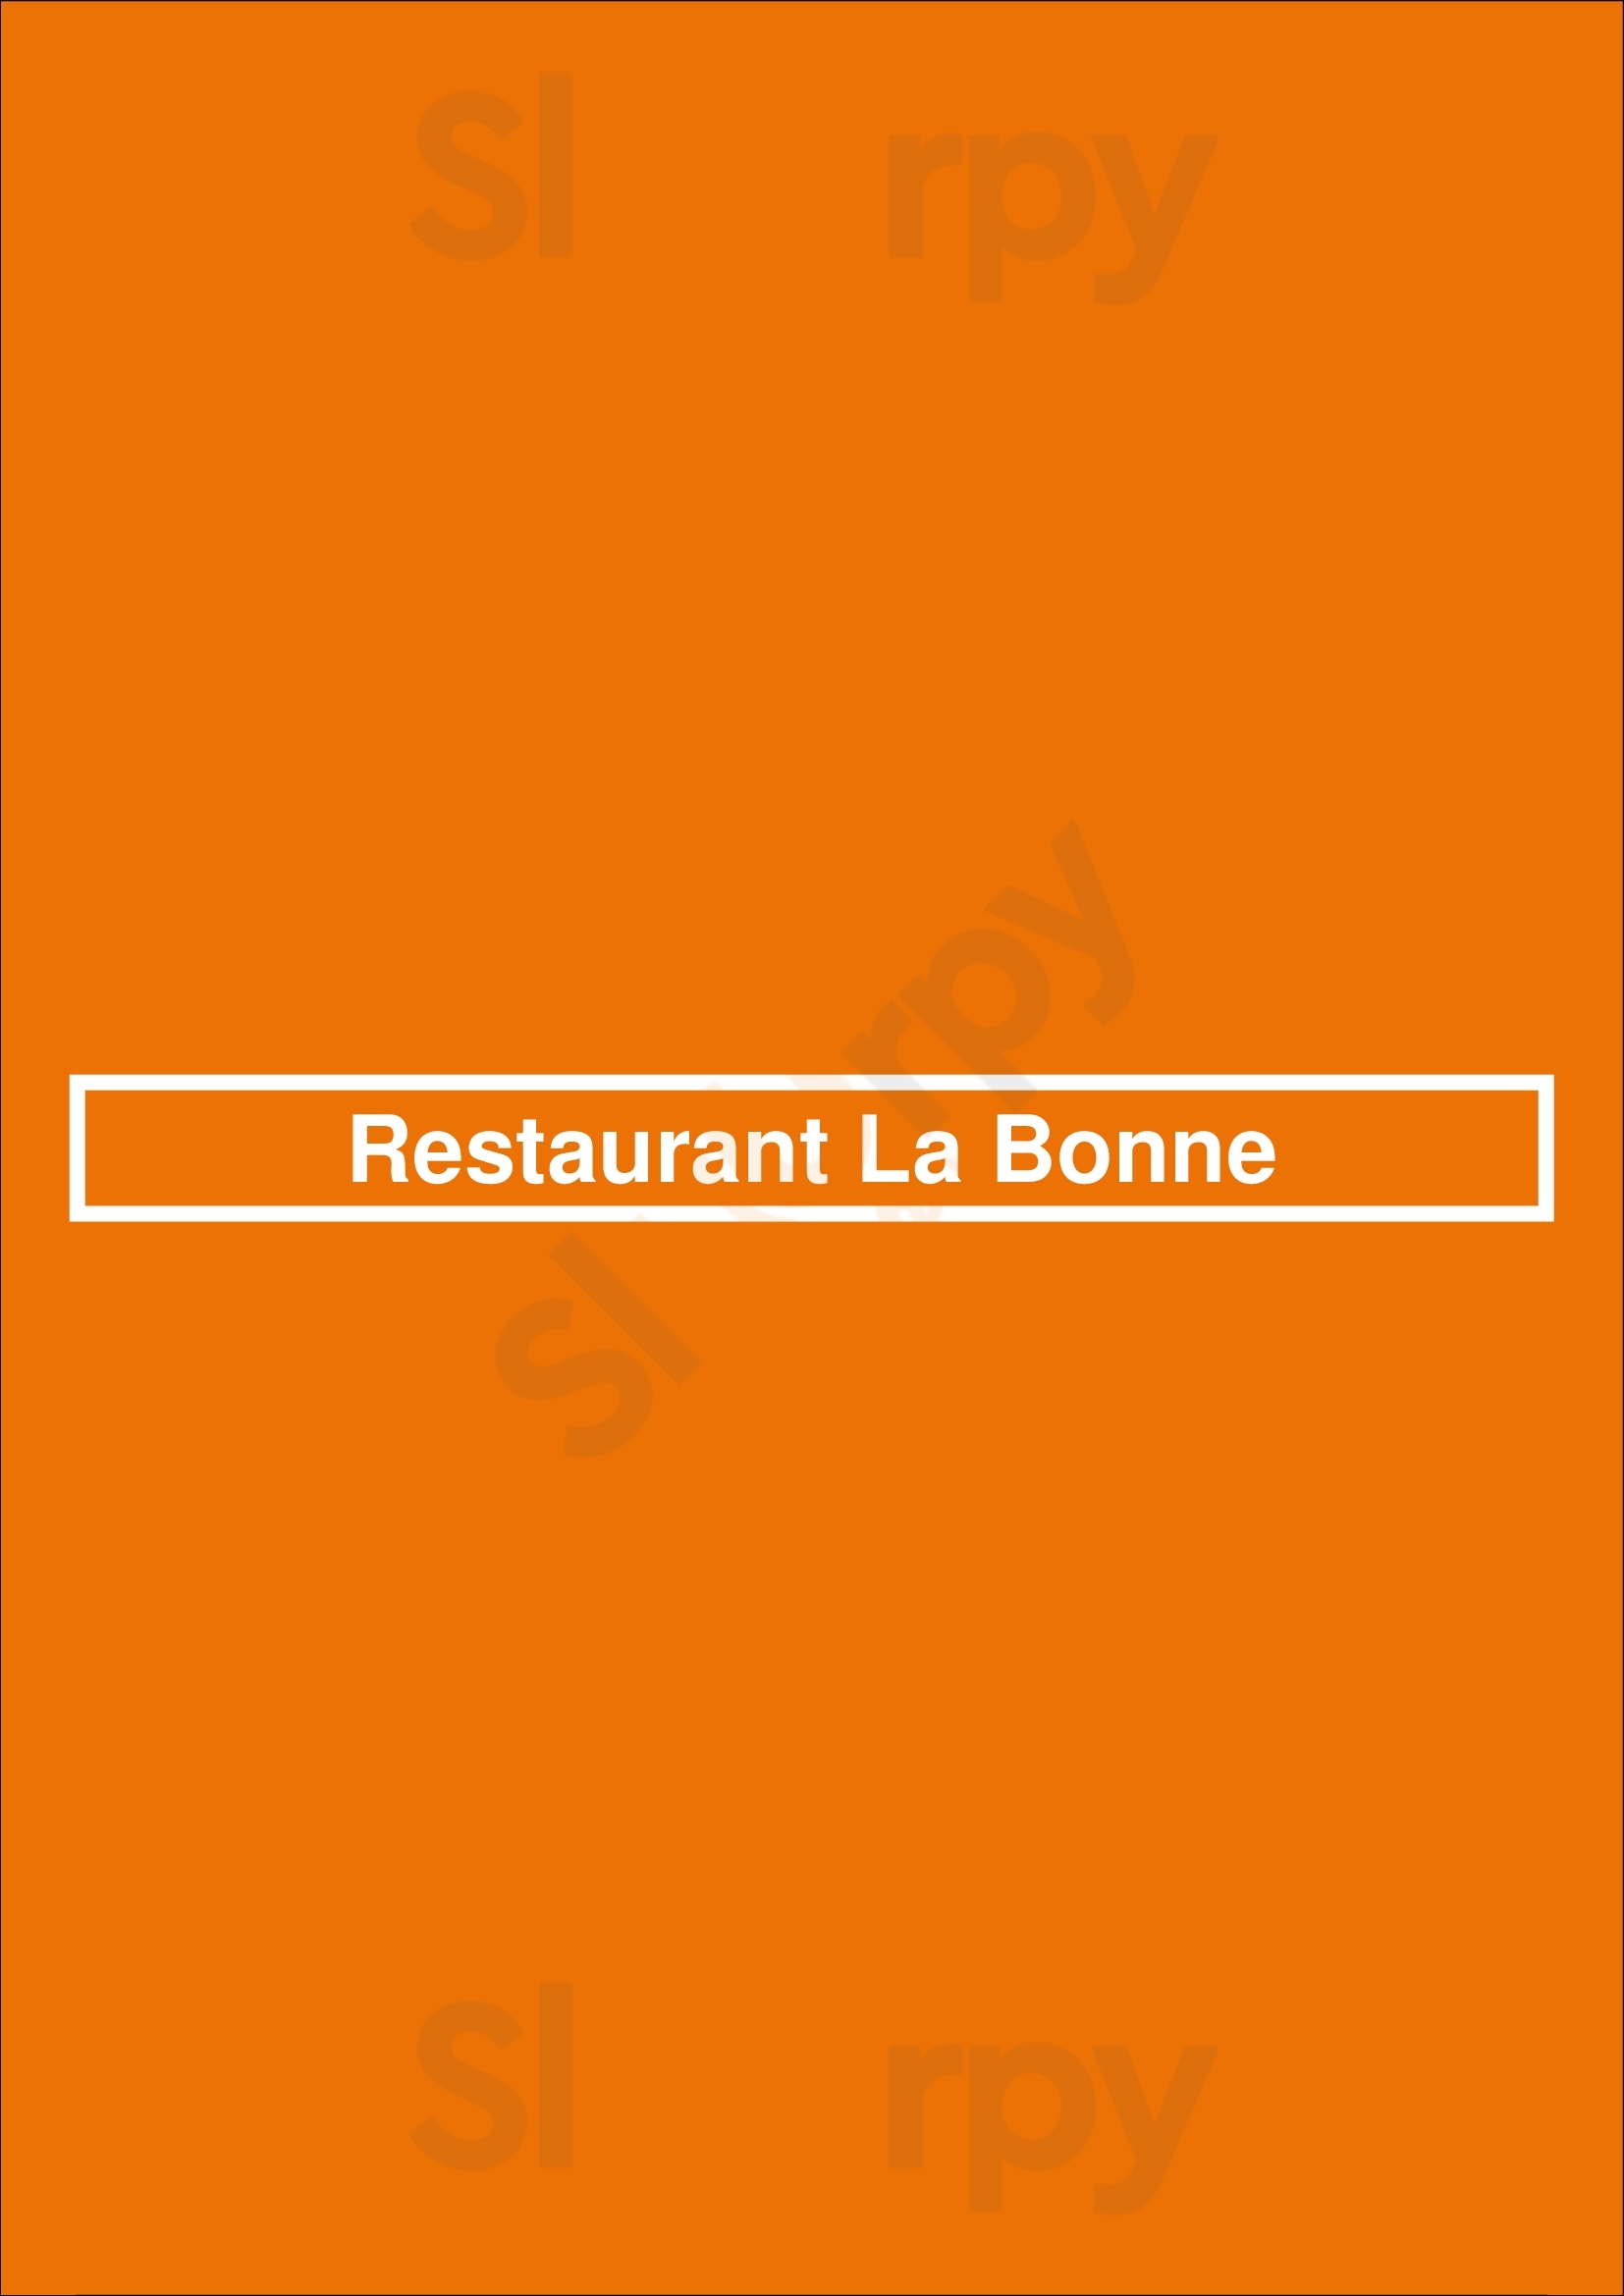 Restaurant La Bonne Kaatsheuvel Menu - 1